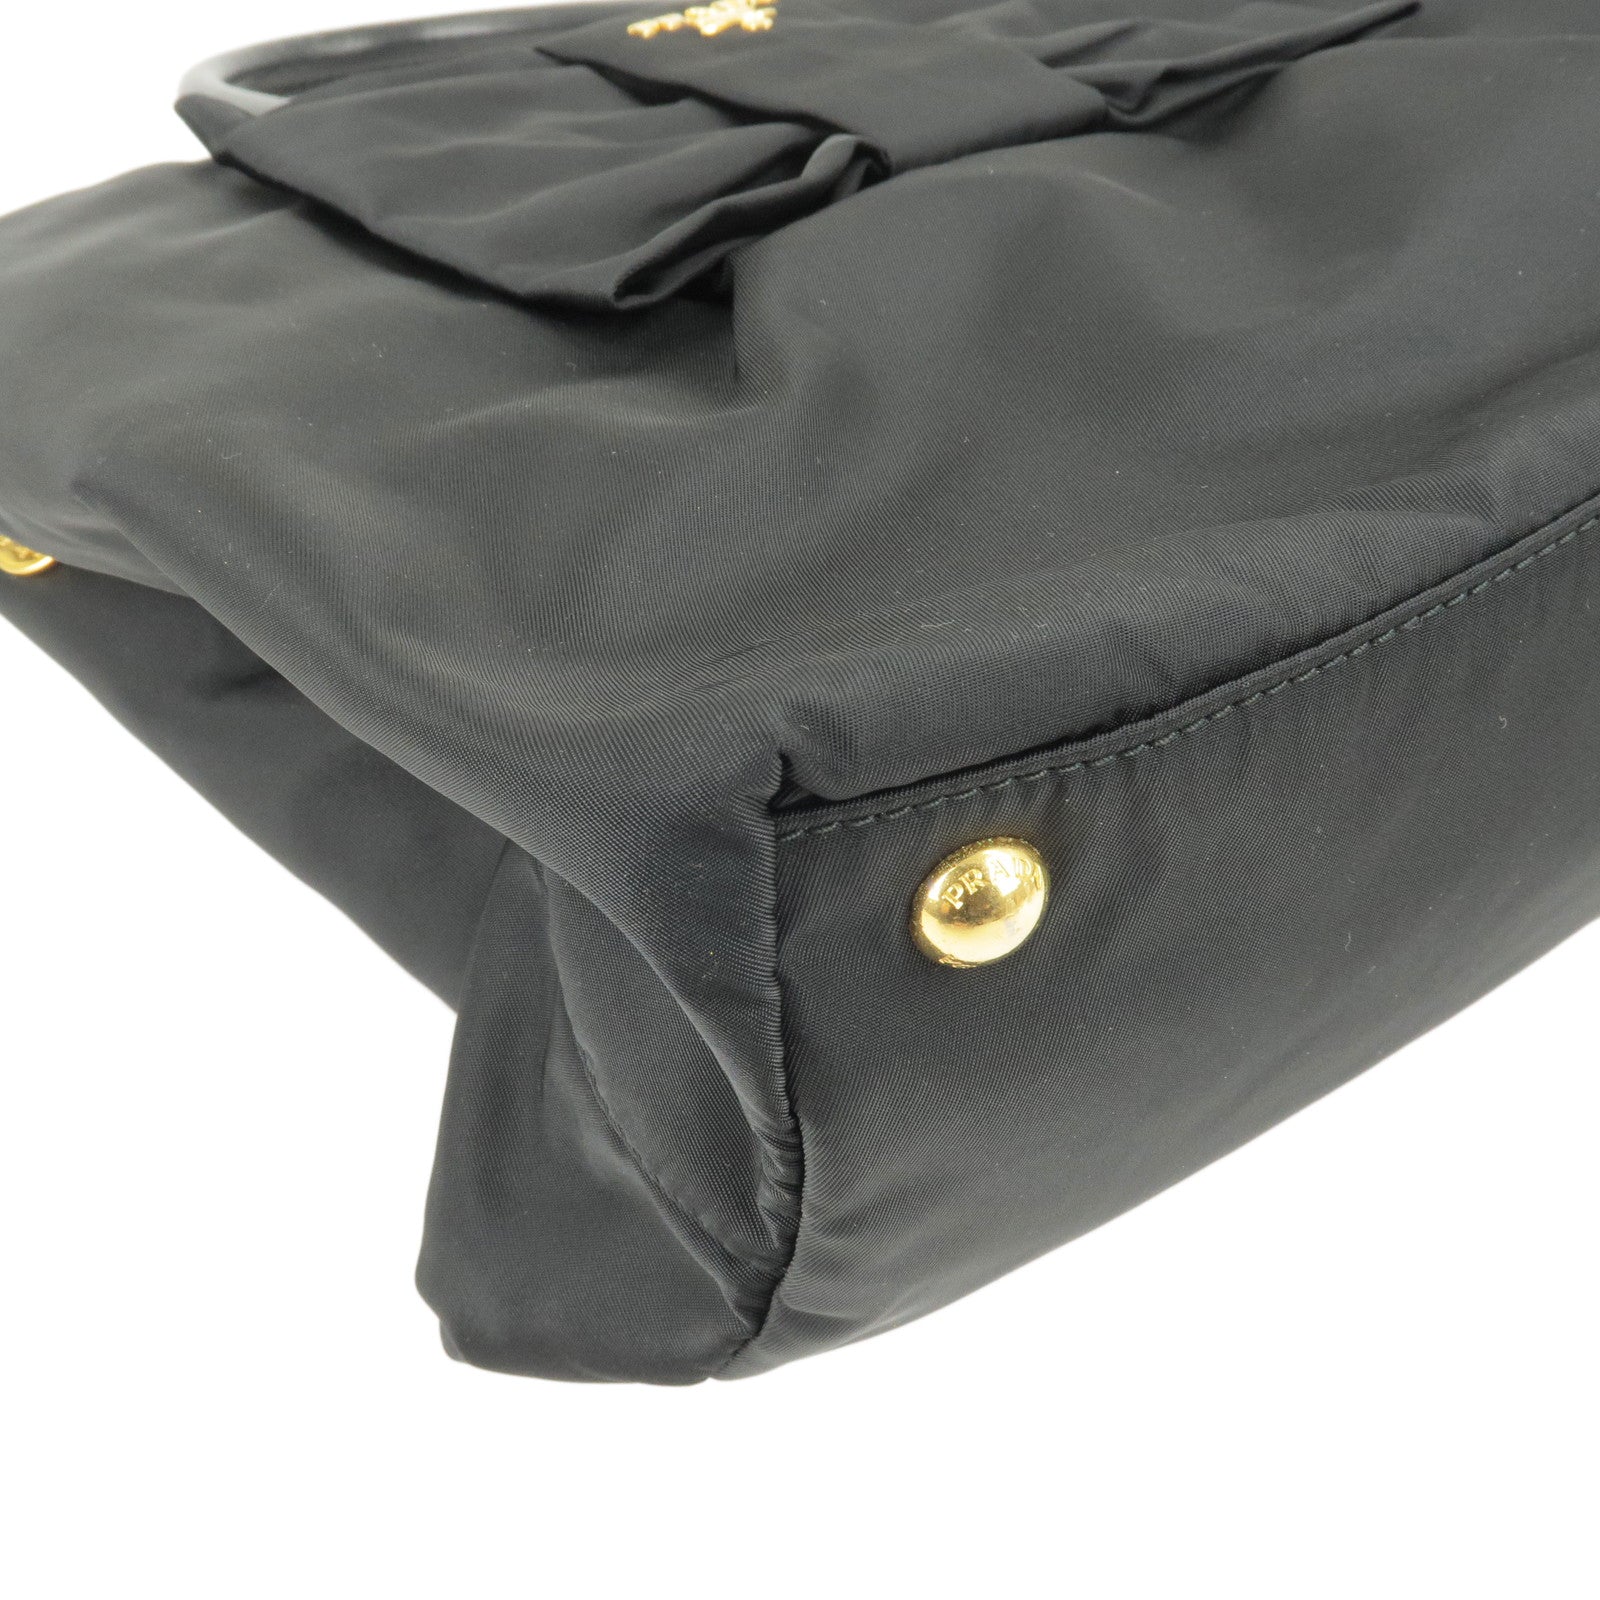 Prada - Tessuto Nylon Shopping Bag Nero